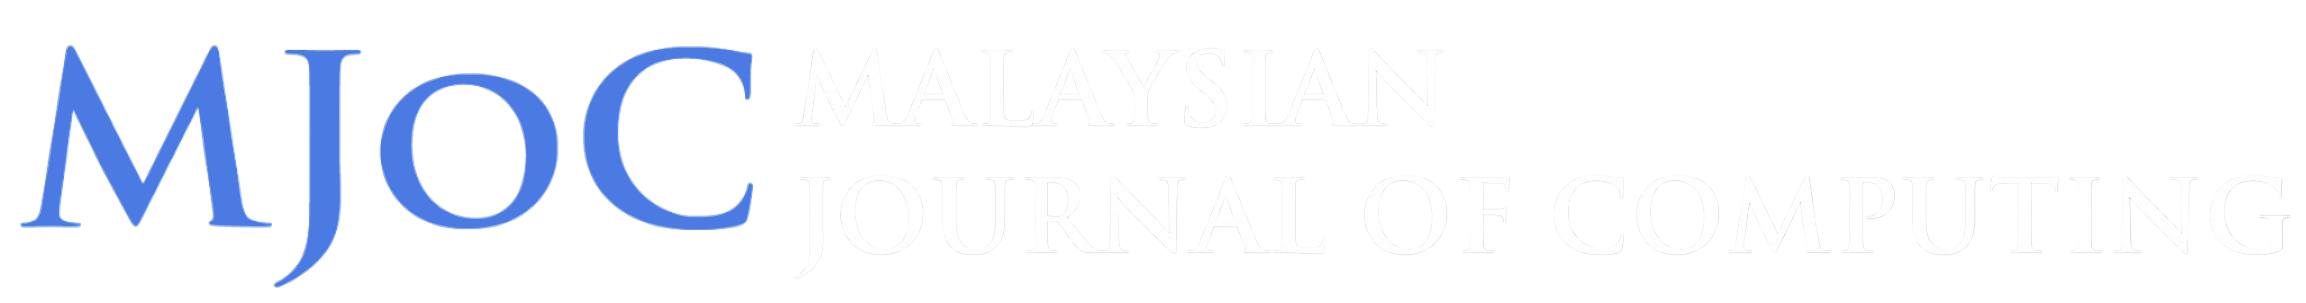 Malaysian Journal of Computing (MJoC)